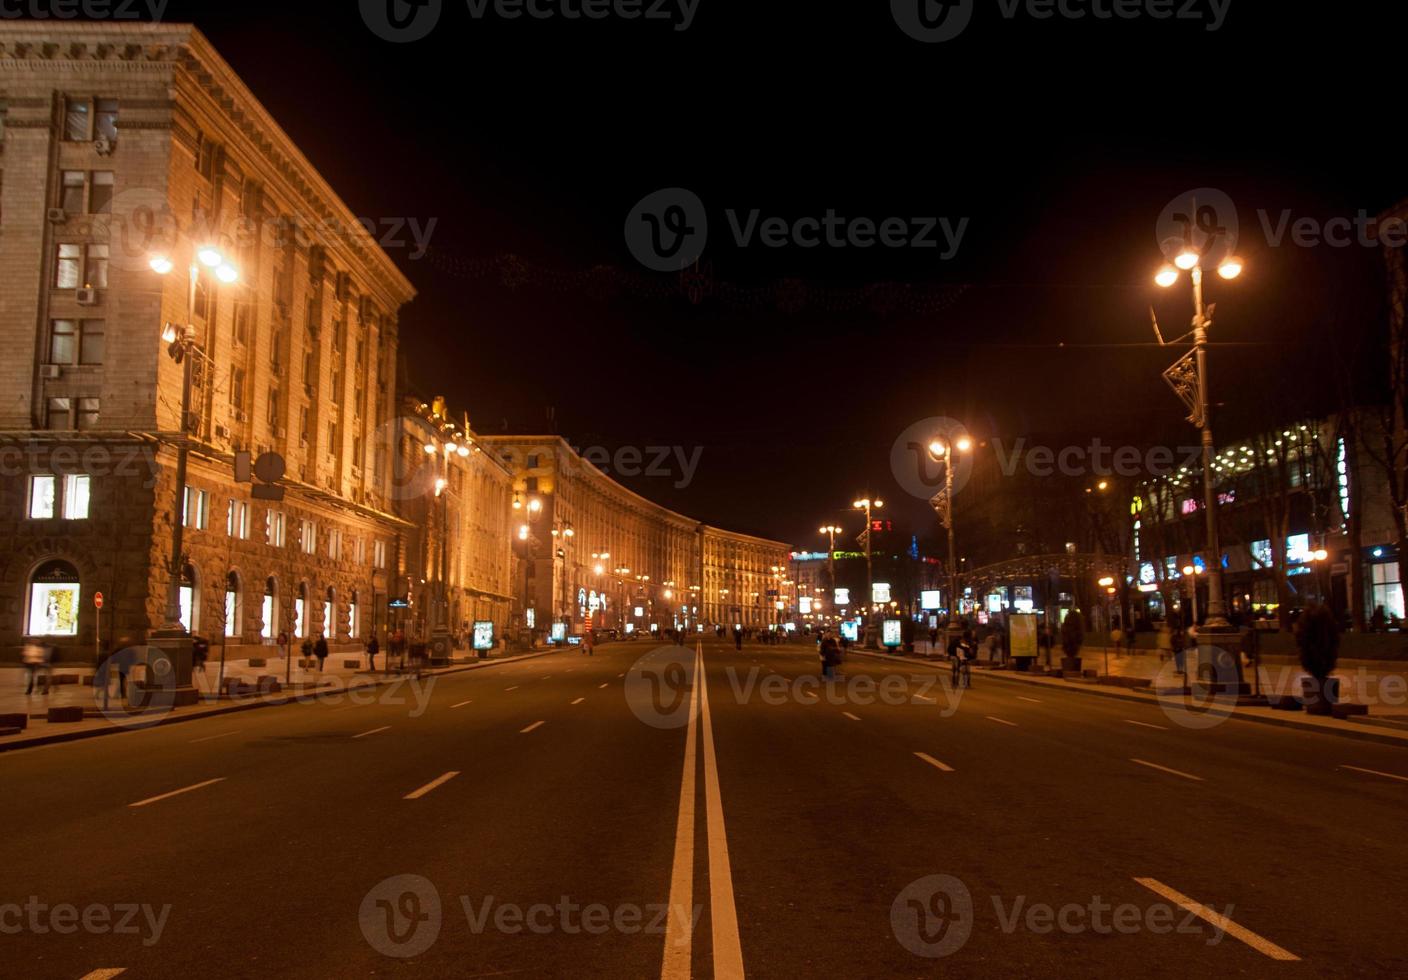 Khreshatyk Street at Night, Kiev photo